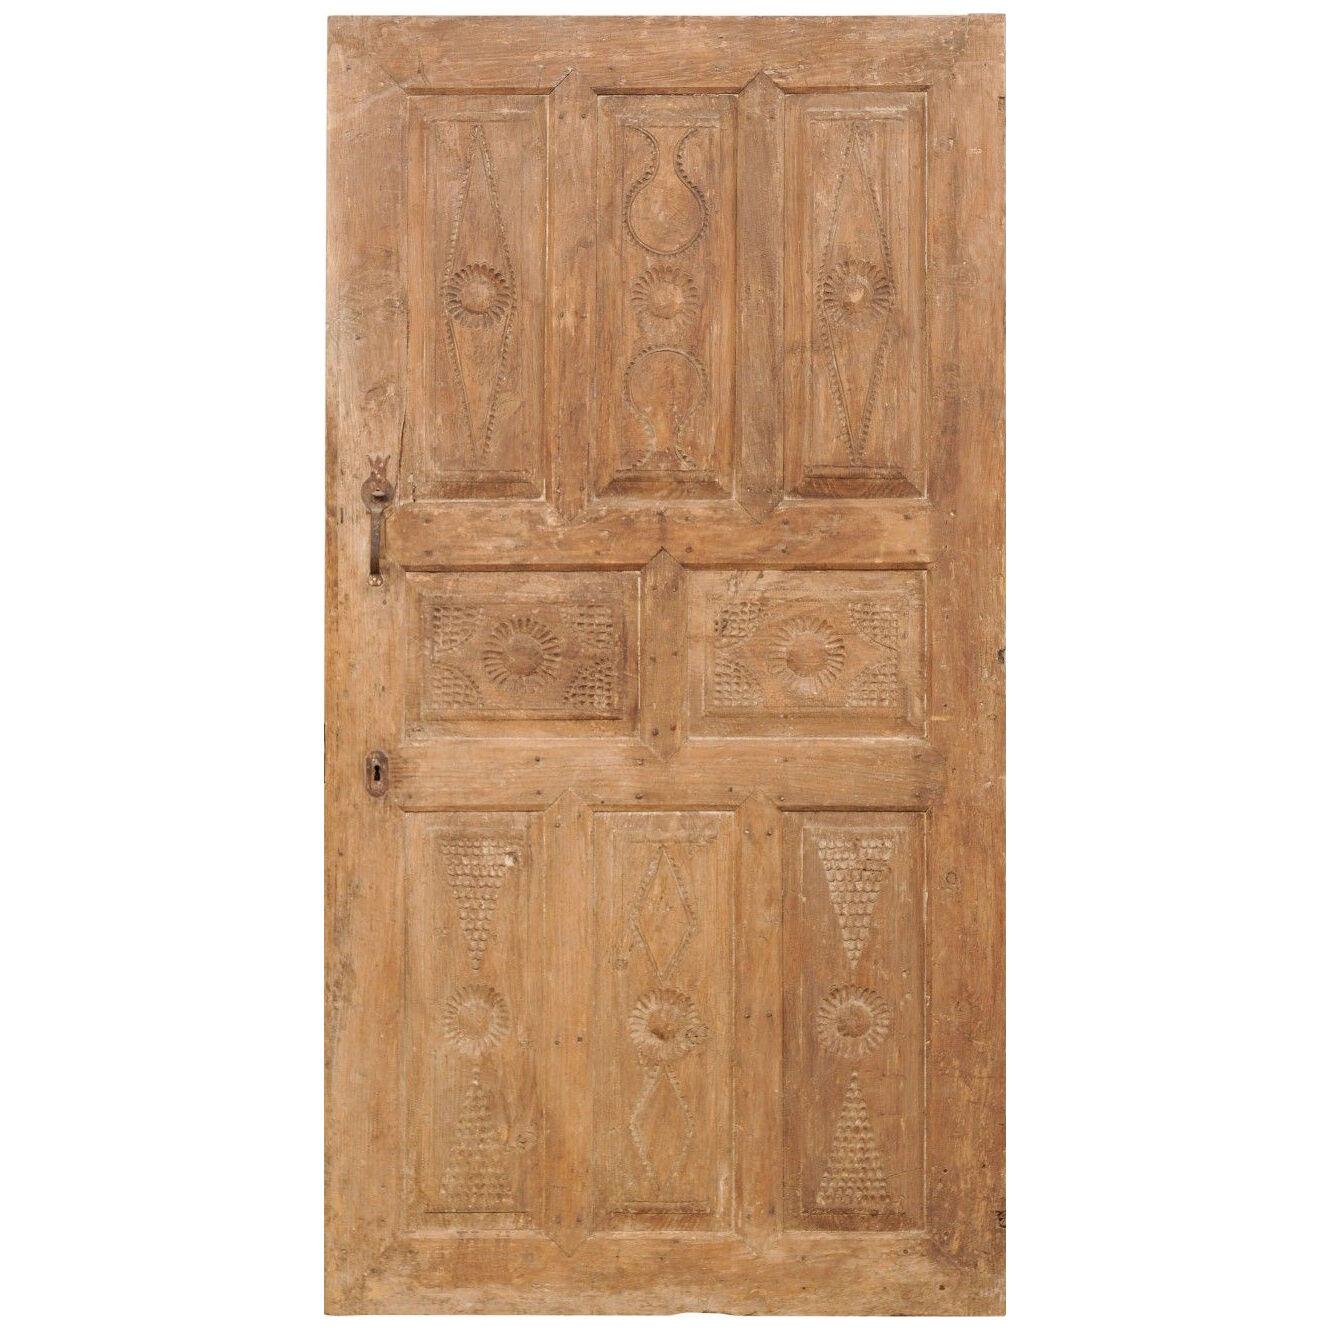 19th C. Turkish Raised Panel Door (65 inches)